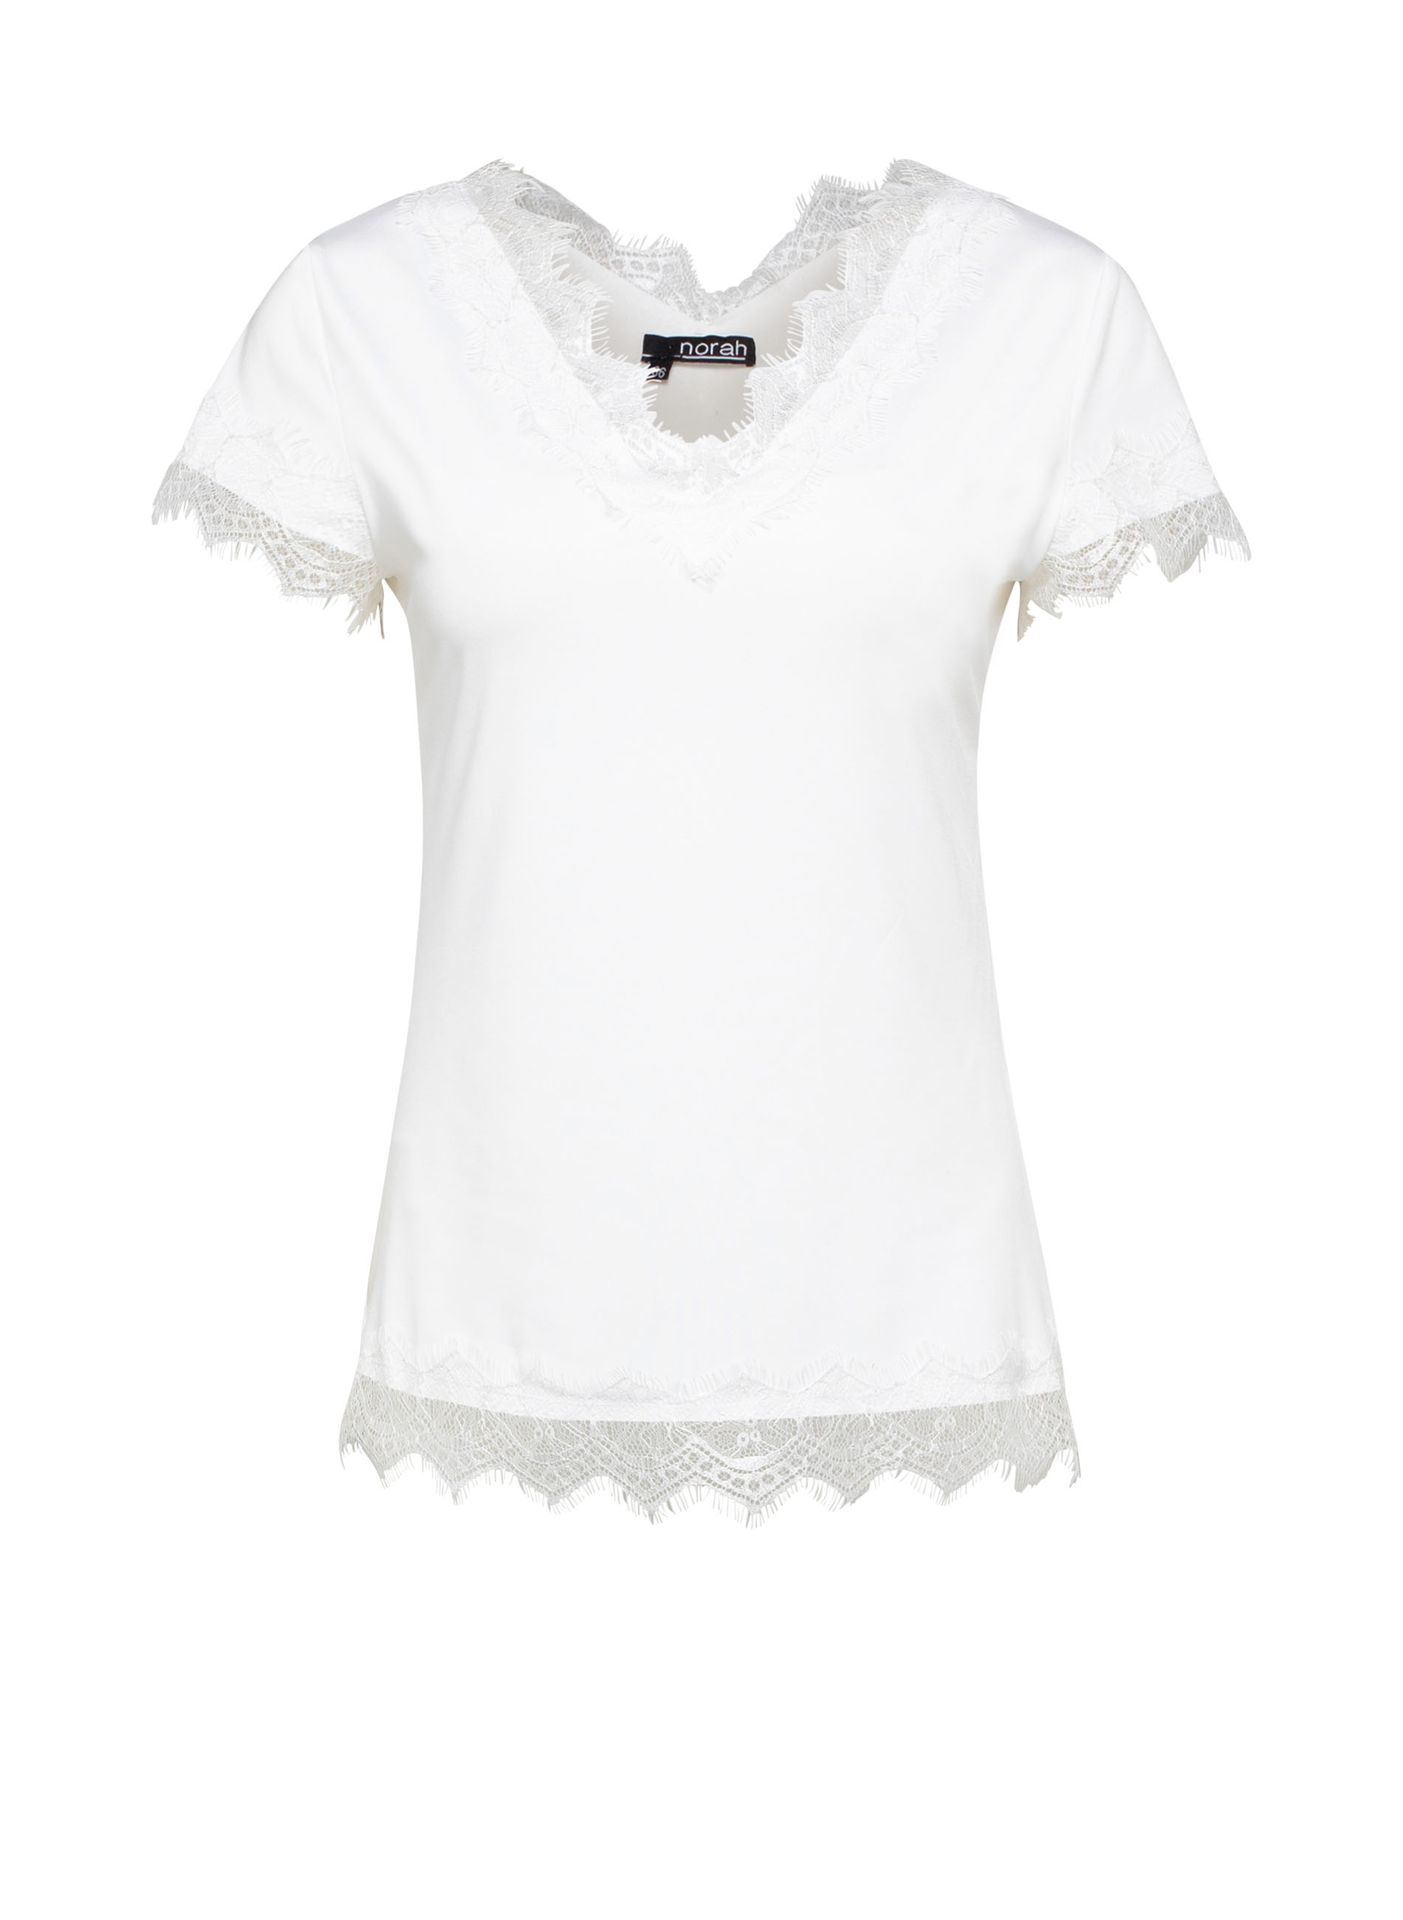 Norah Shirt wit off-white 210912-101